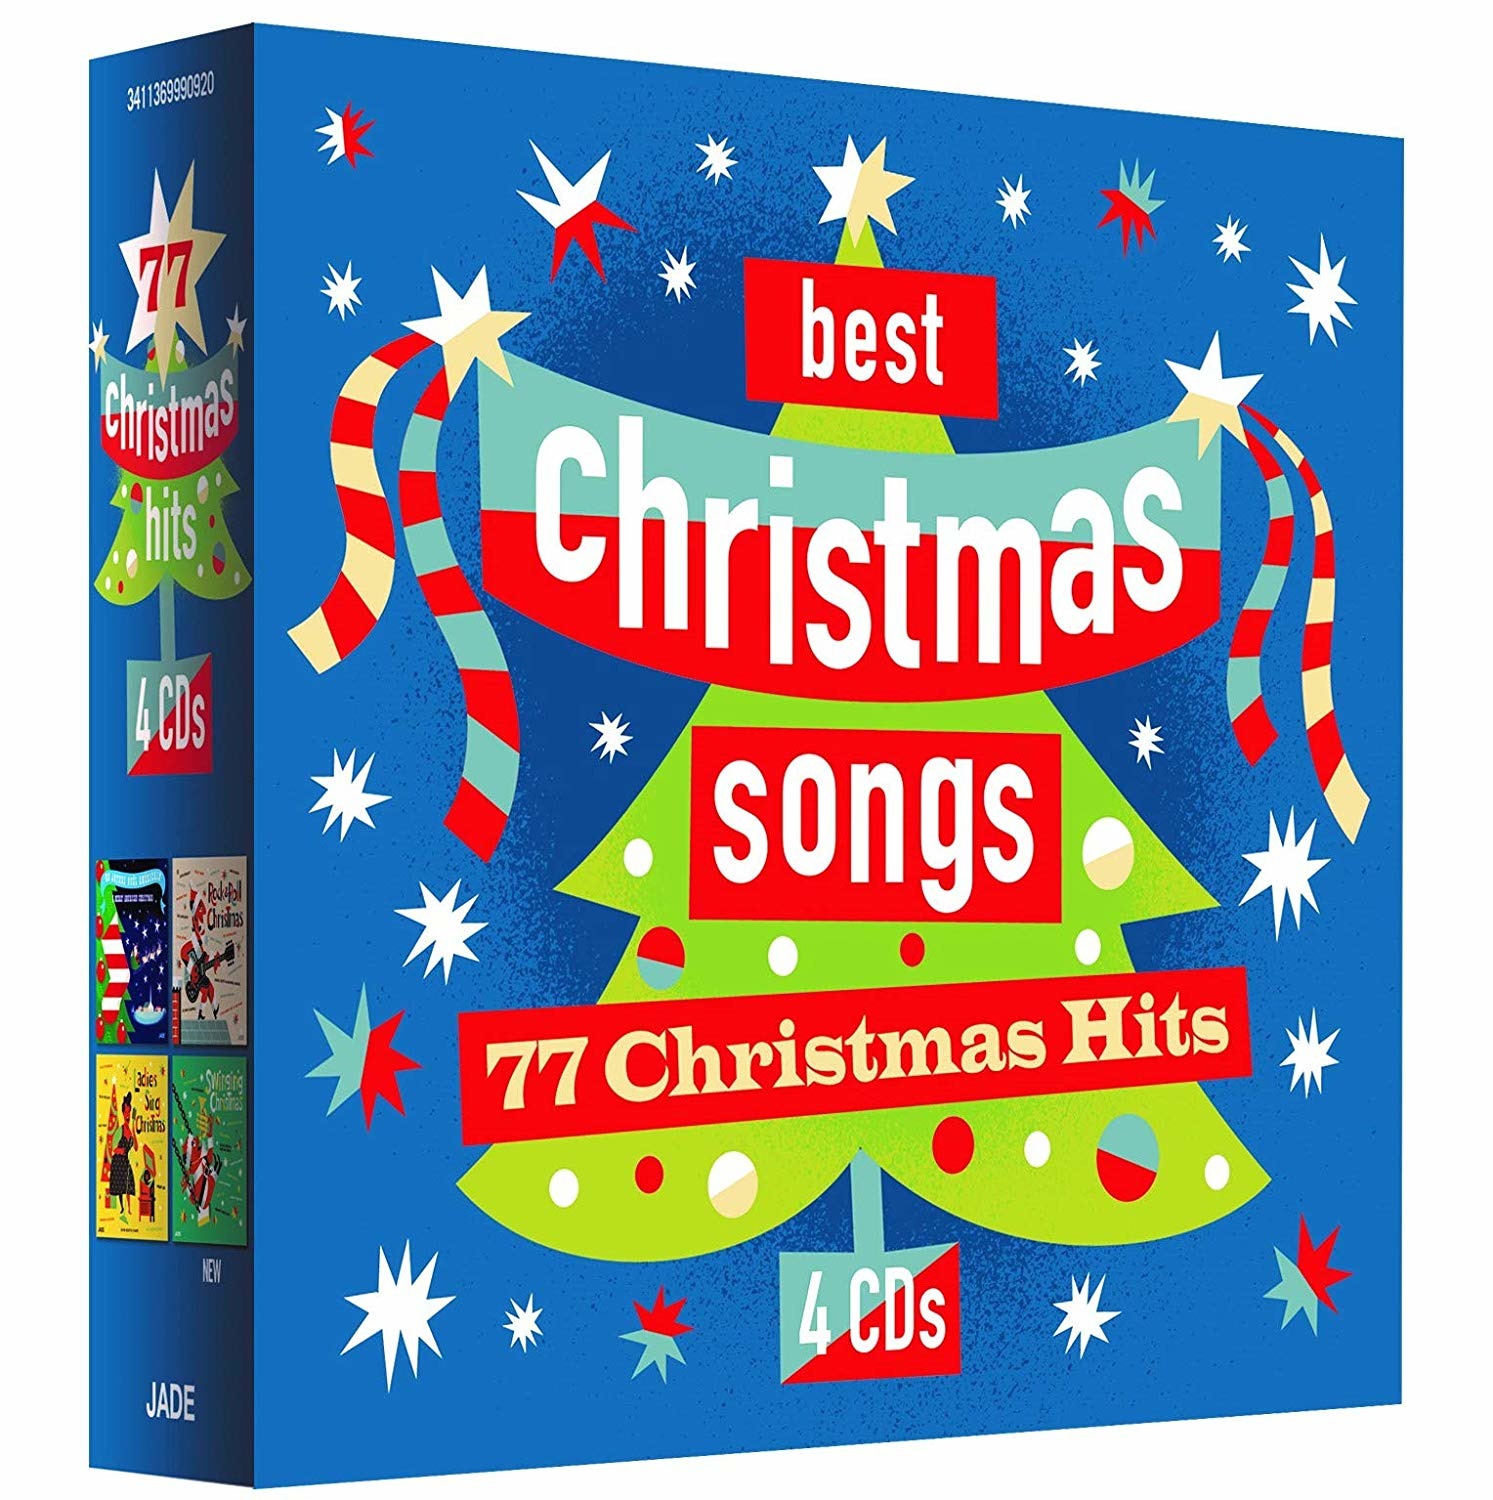 SWINGING CHRISTMAS SONGS 4CD BOX